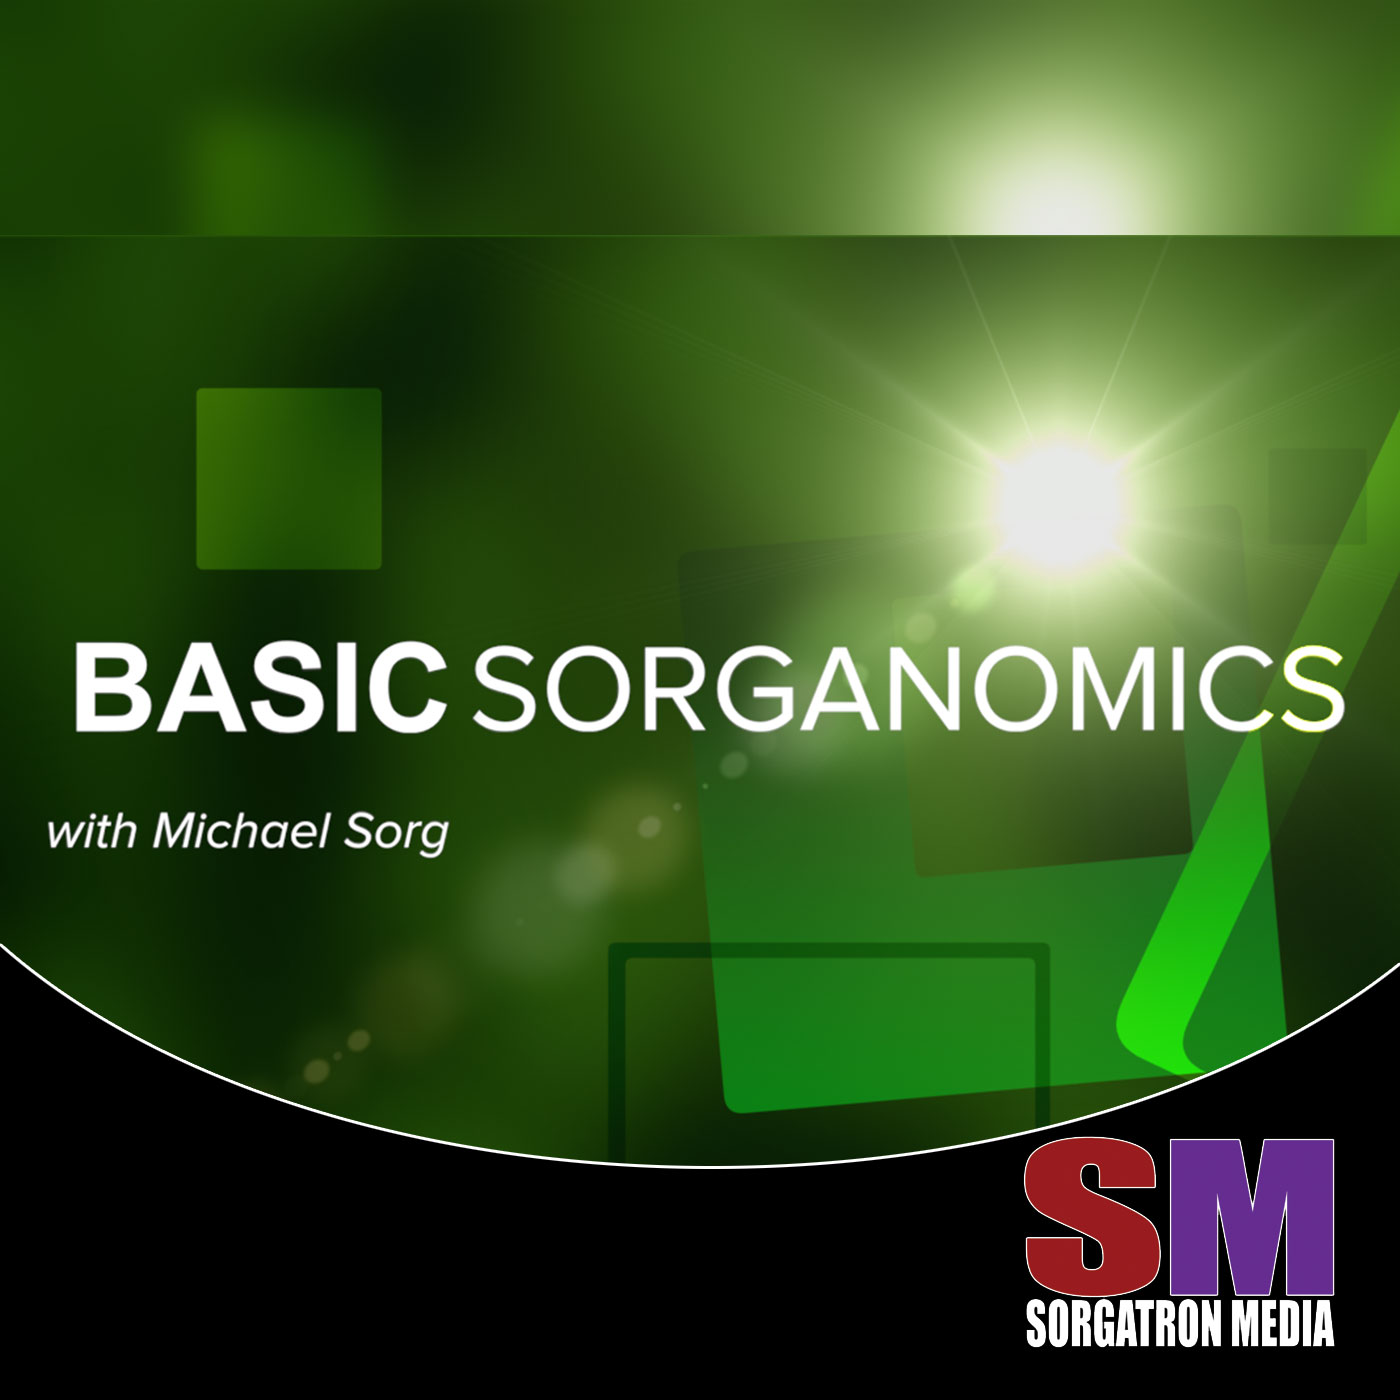 Basic Sorganomics